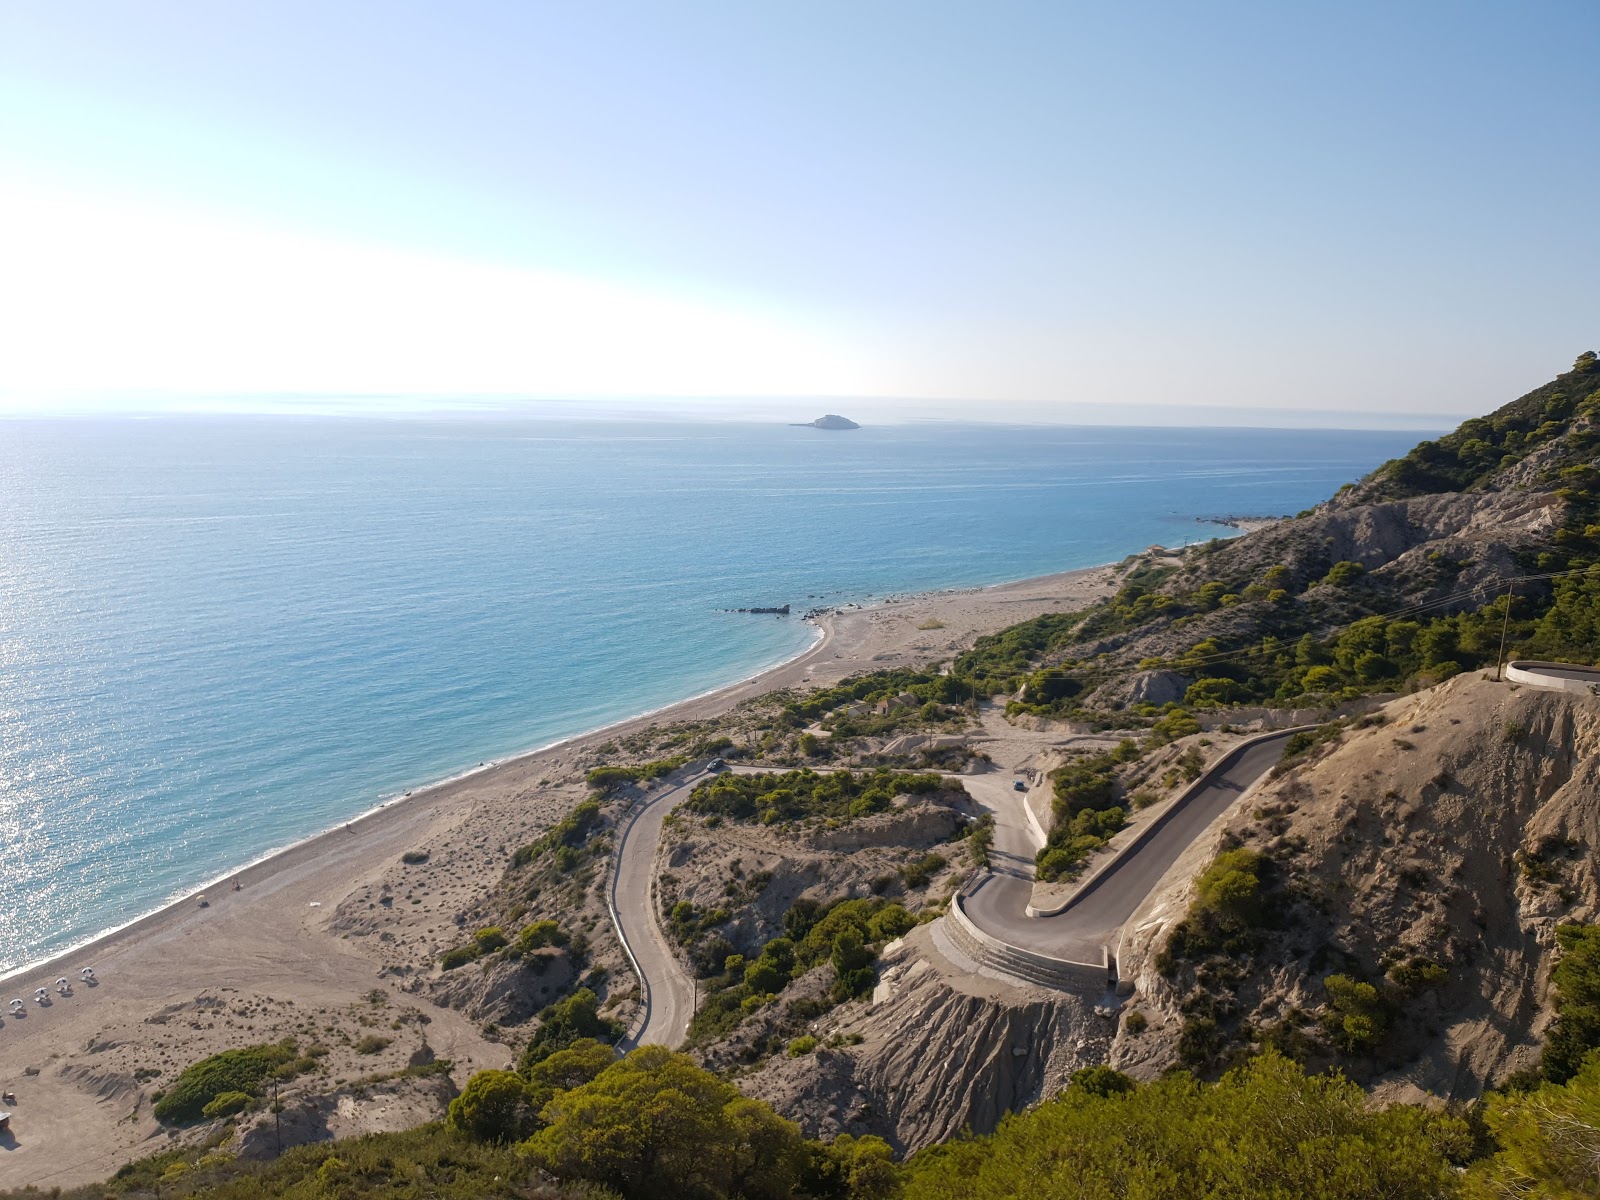 Zdjęcie Gialos beach i jego piękne krajobrazy